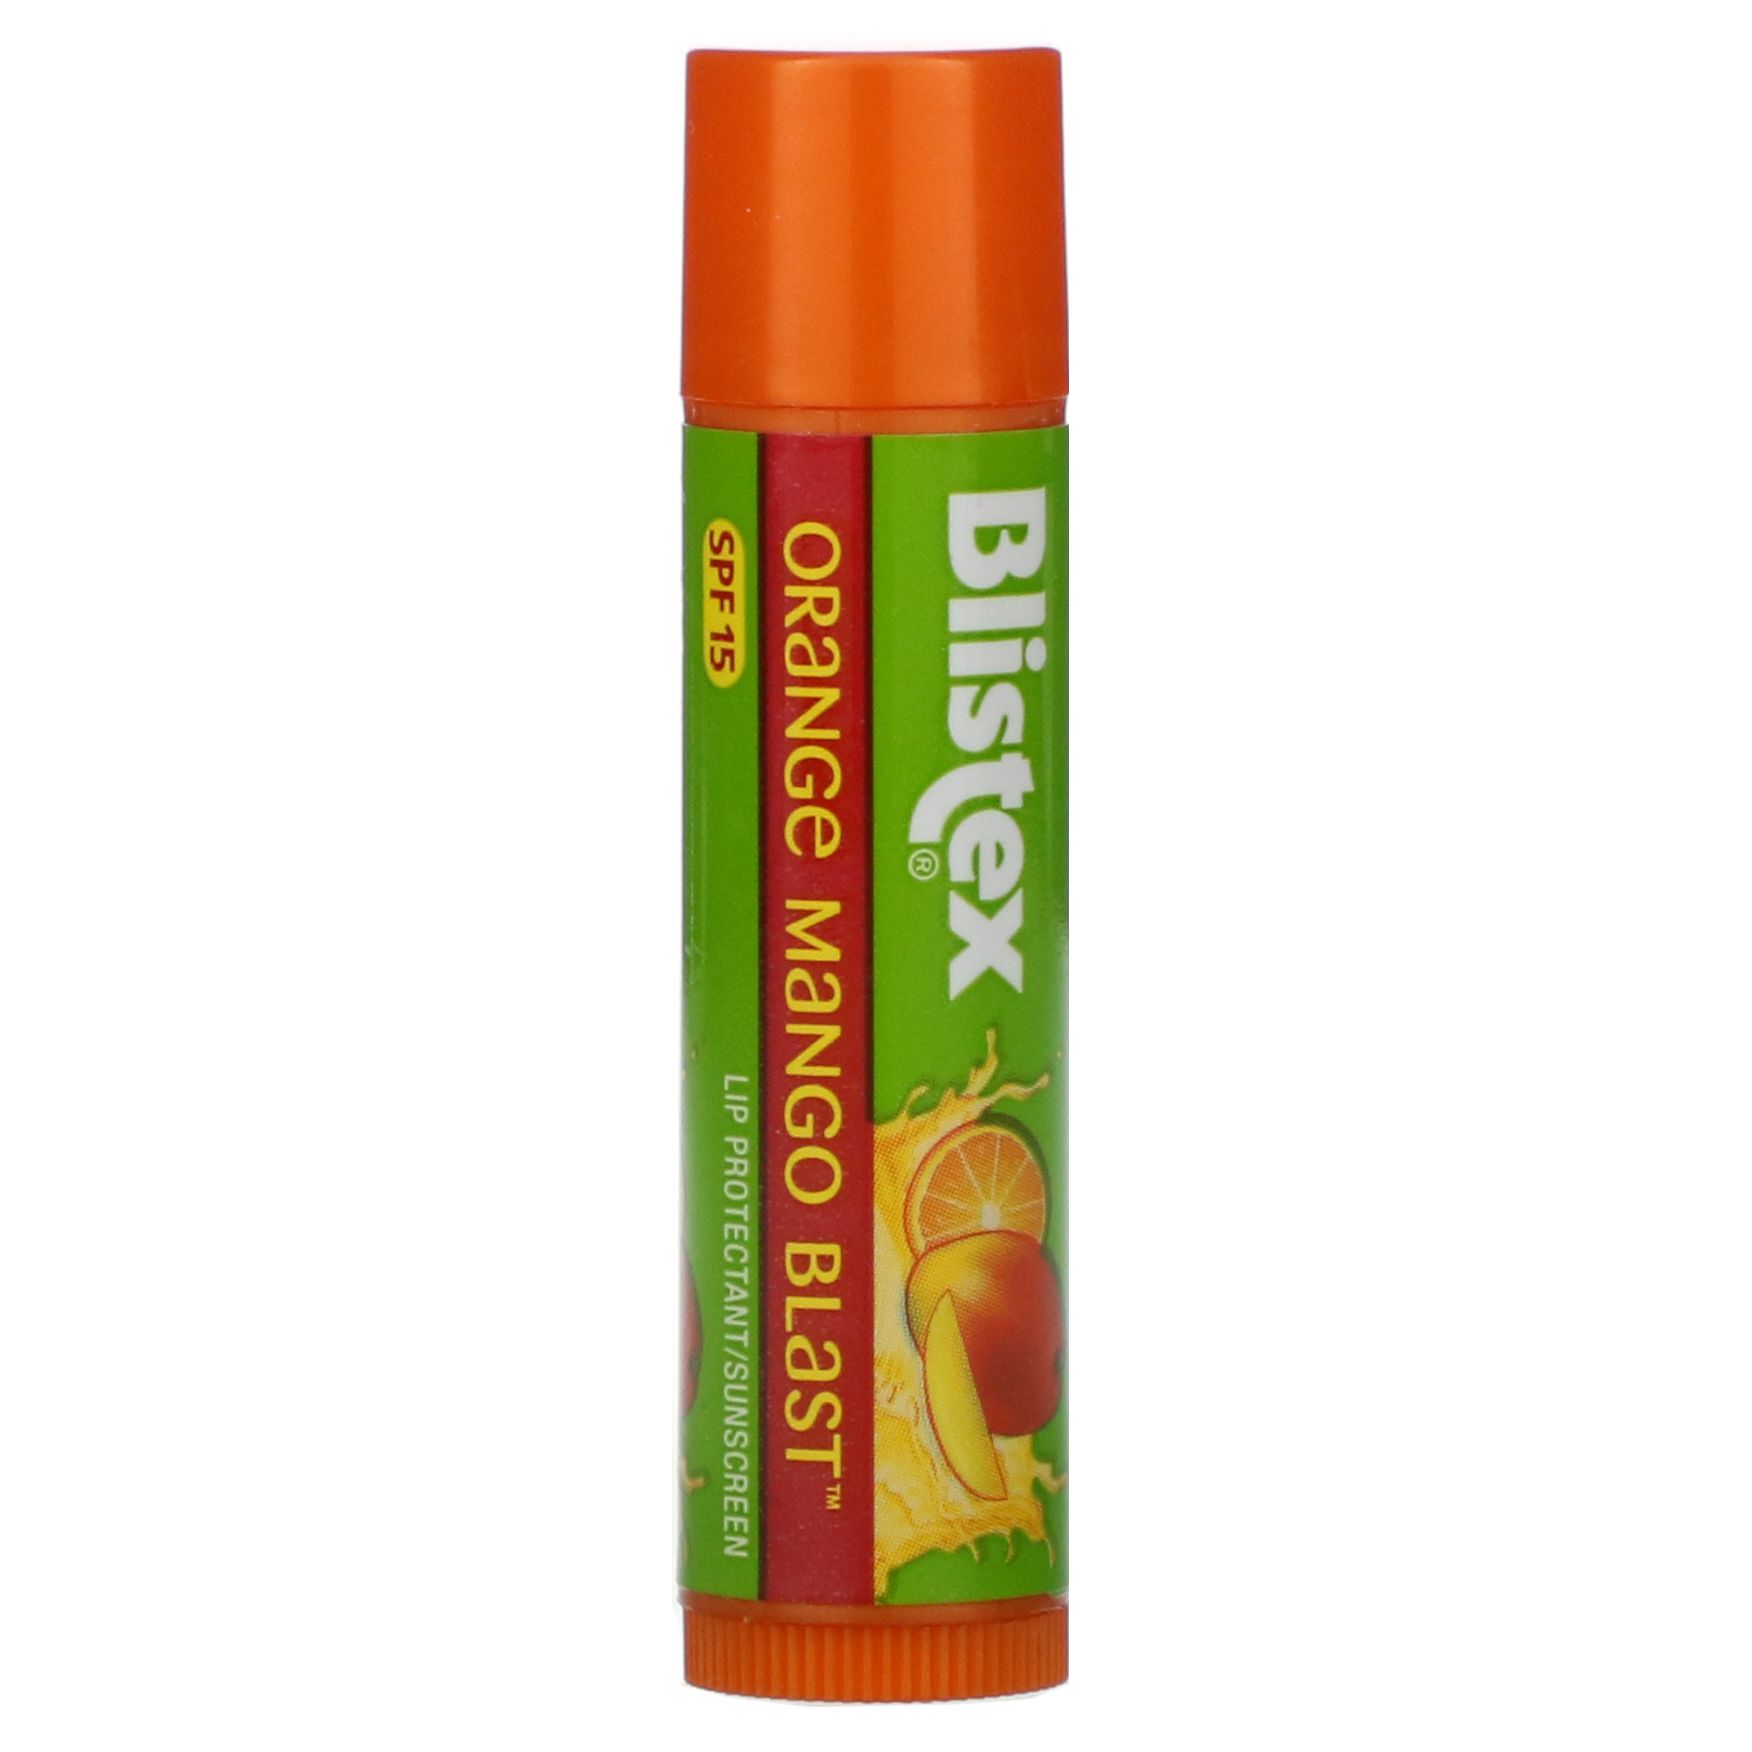 Blistex Lip Protectant/Sunscreen SPF 15 Orange Mango Blast 0.15 oz (4.25 g) фотографии